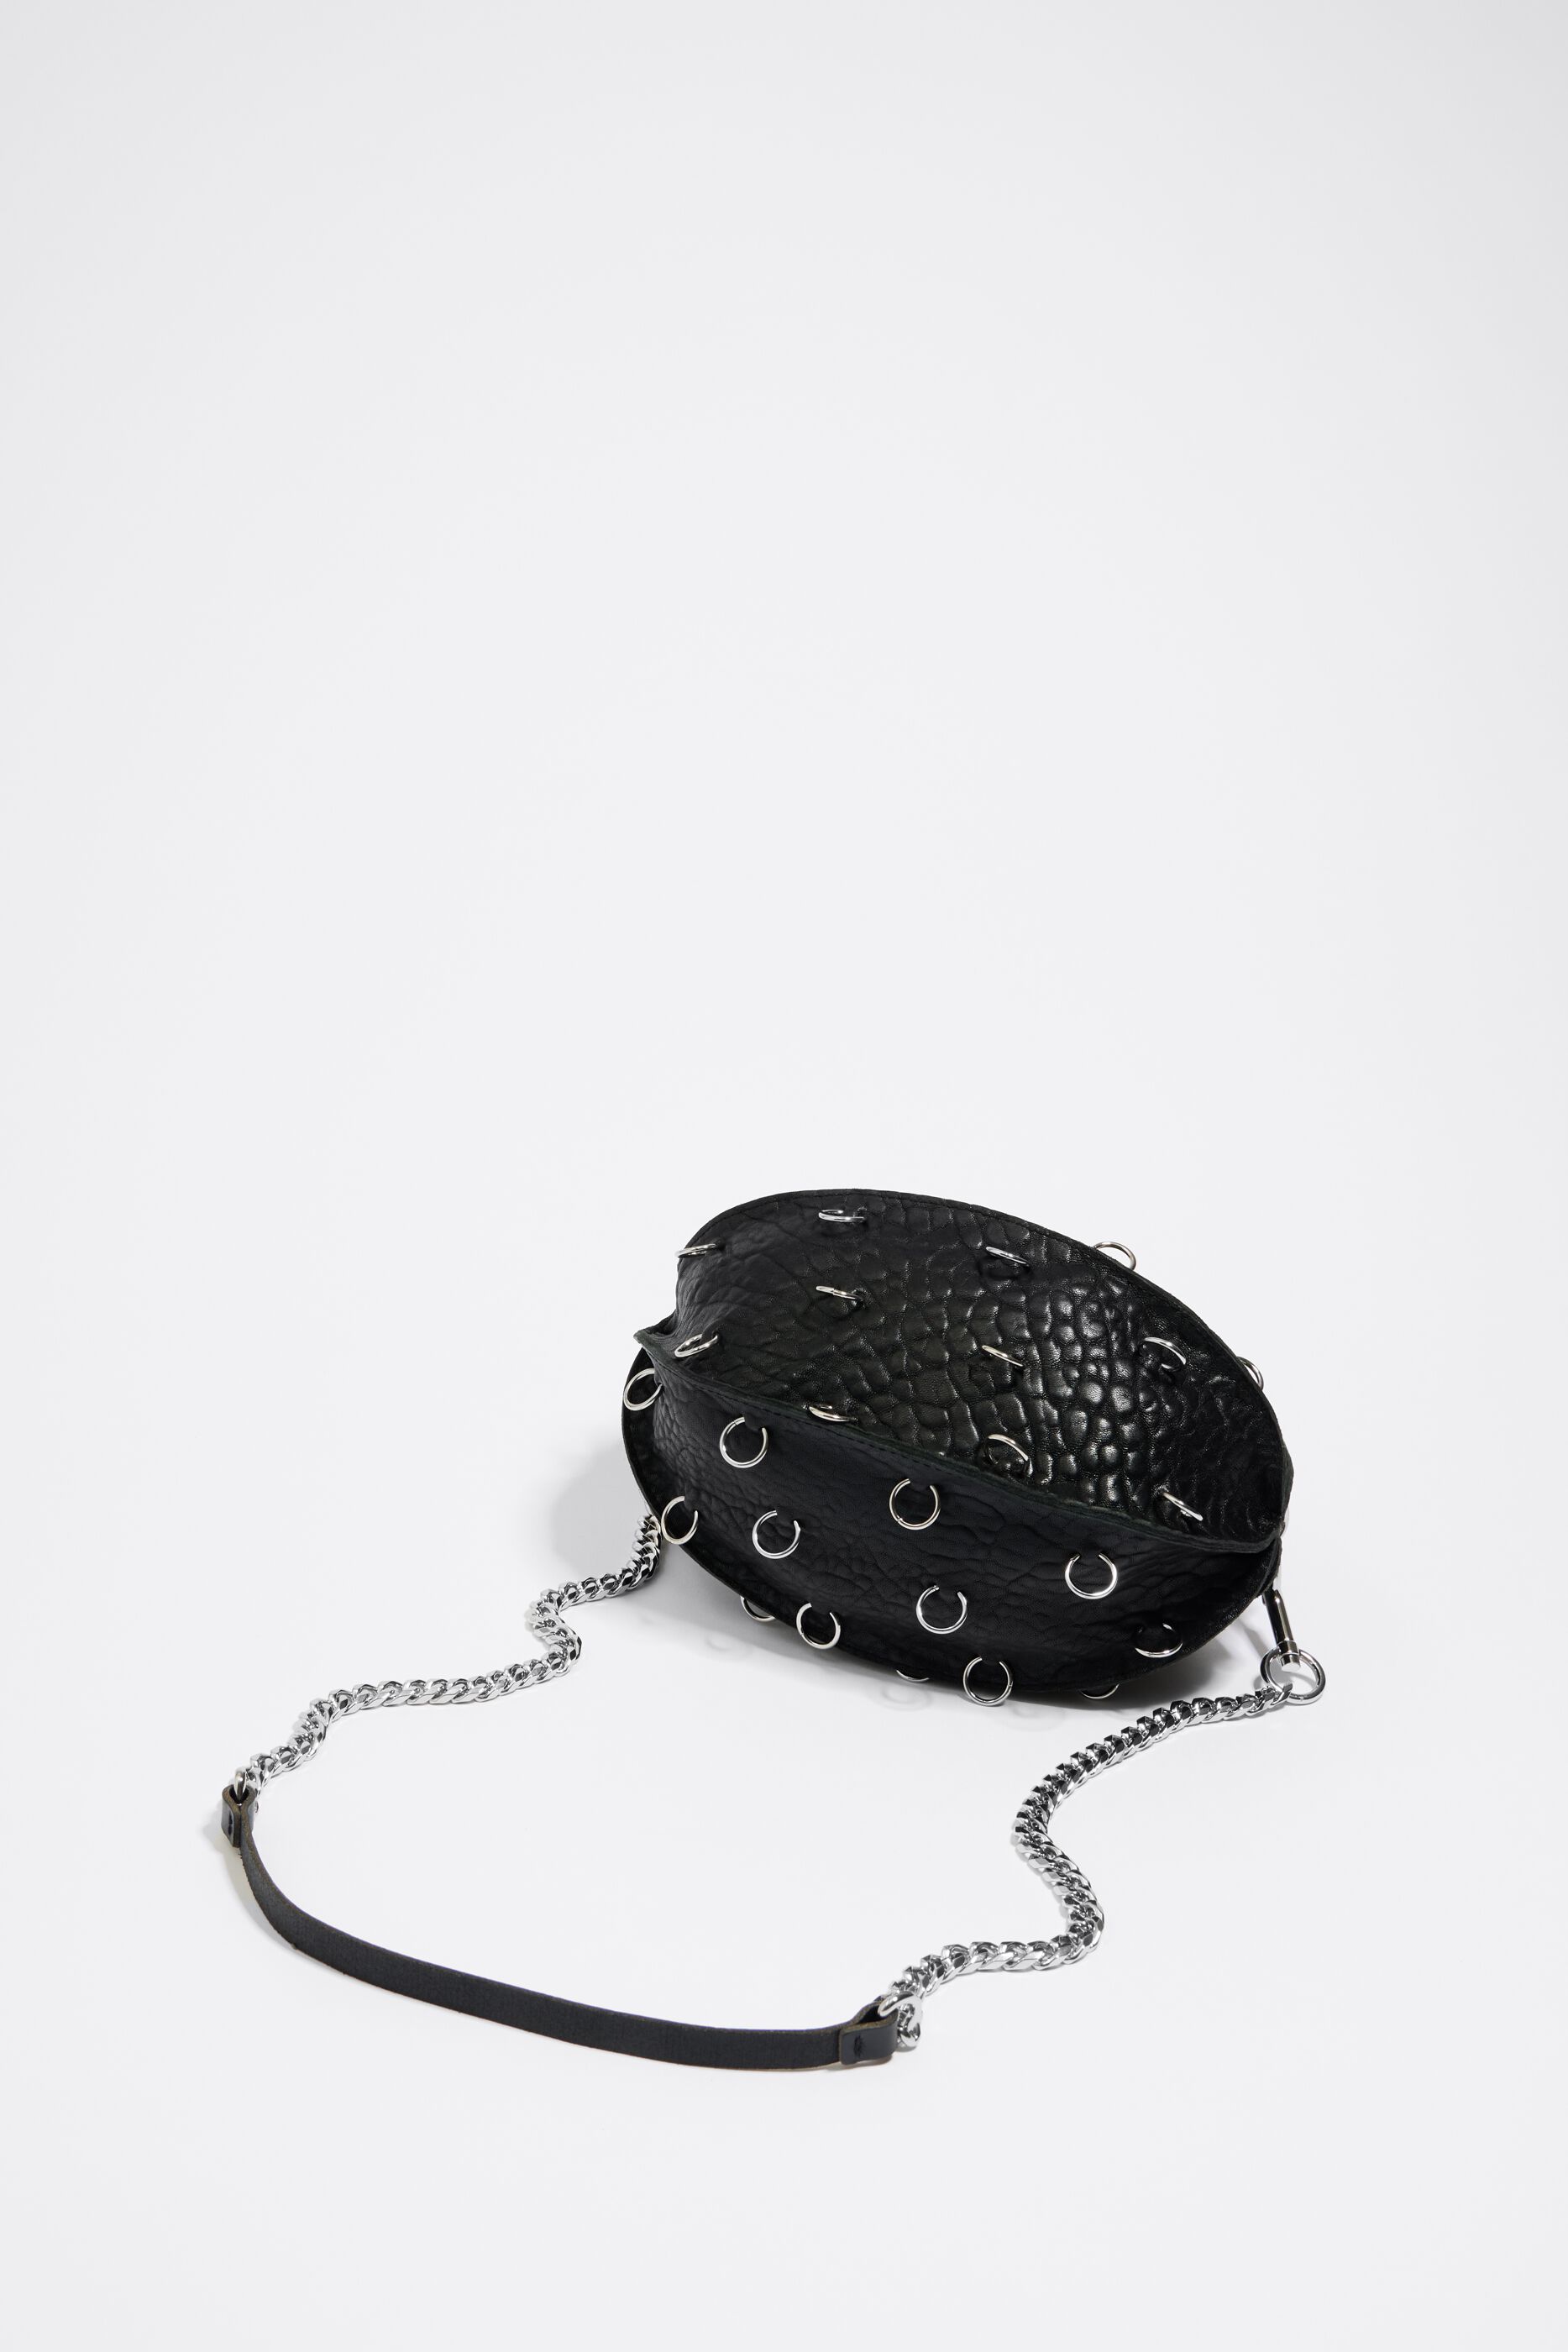 Women's Sparkling Round Ball Shaped Handbag With Rhinestone Embellished  Bracelet Handle, Evening/prom/fancy/party Bag, Wedding Clutch | SHEIN